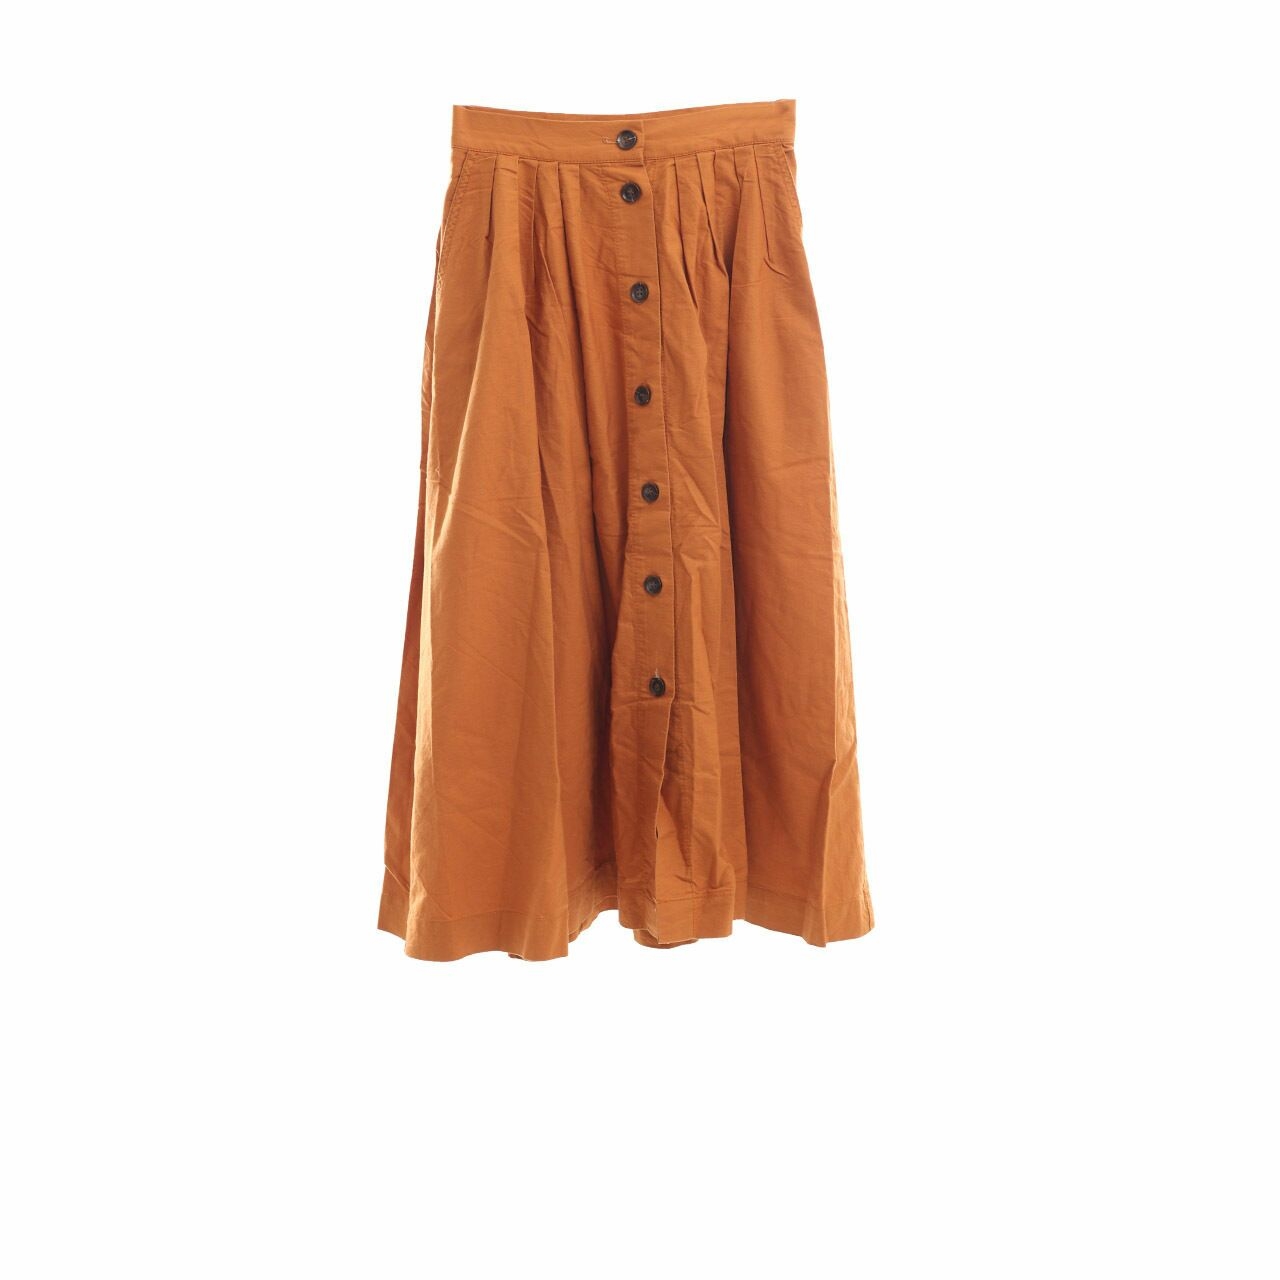 H&M Camel Orange Midi Skirt